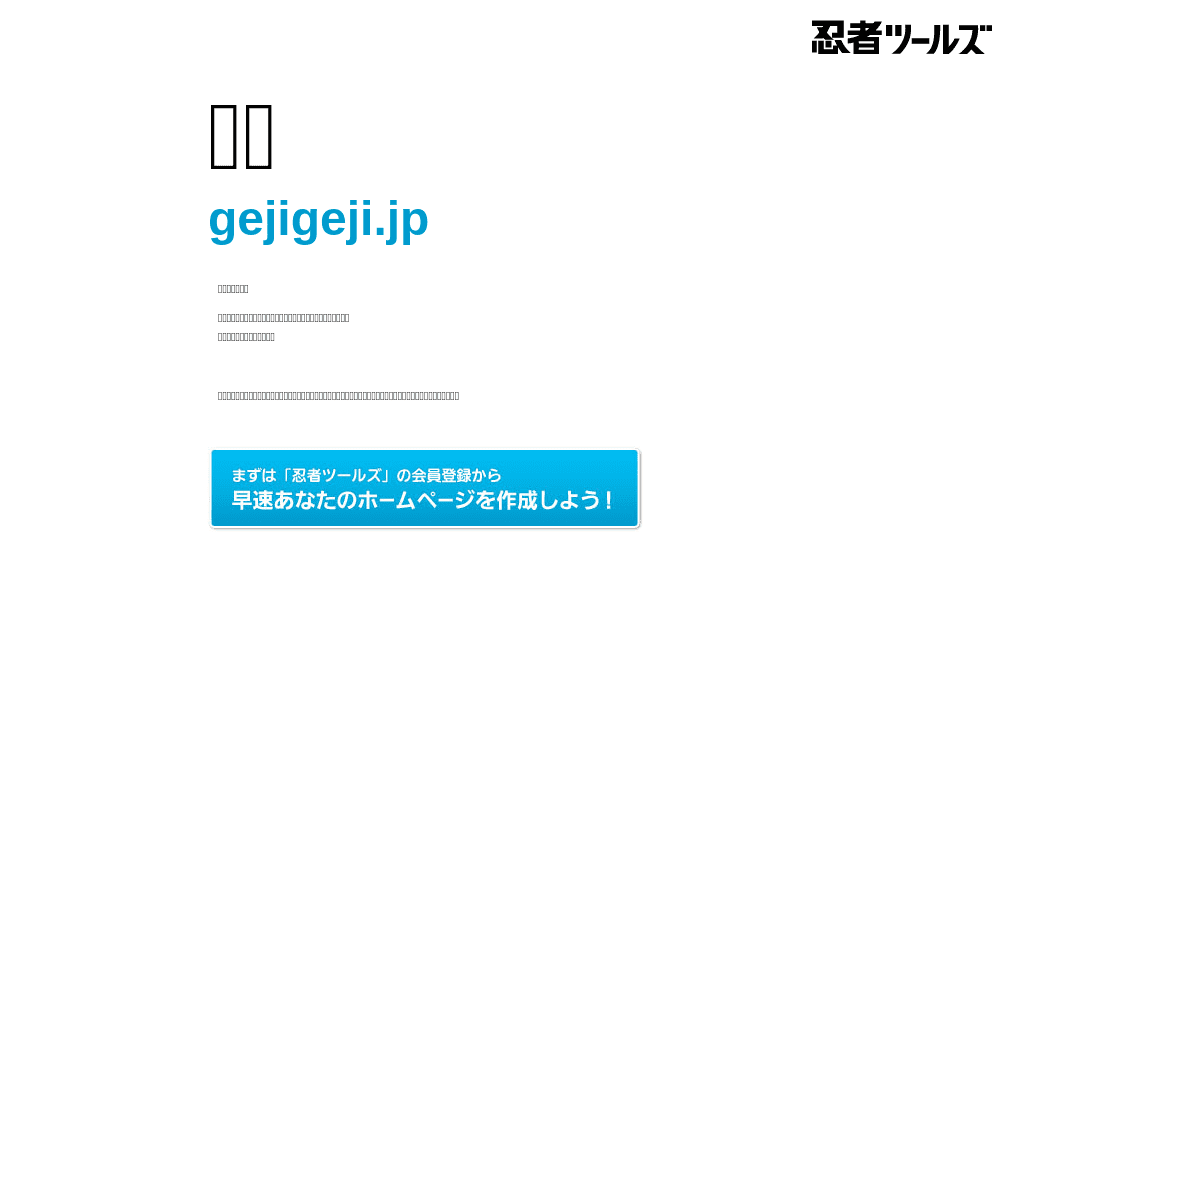 A complete backup of https://gejigeji.jp